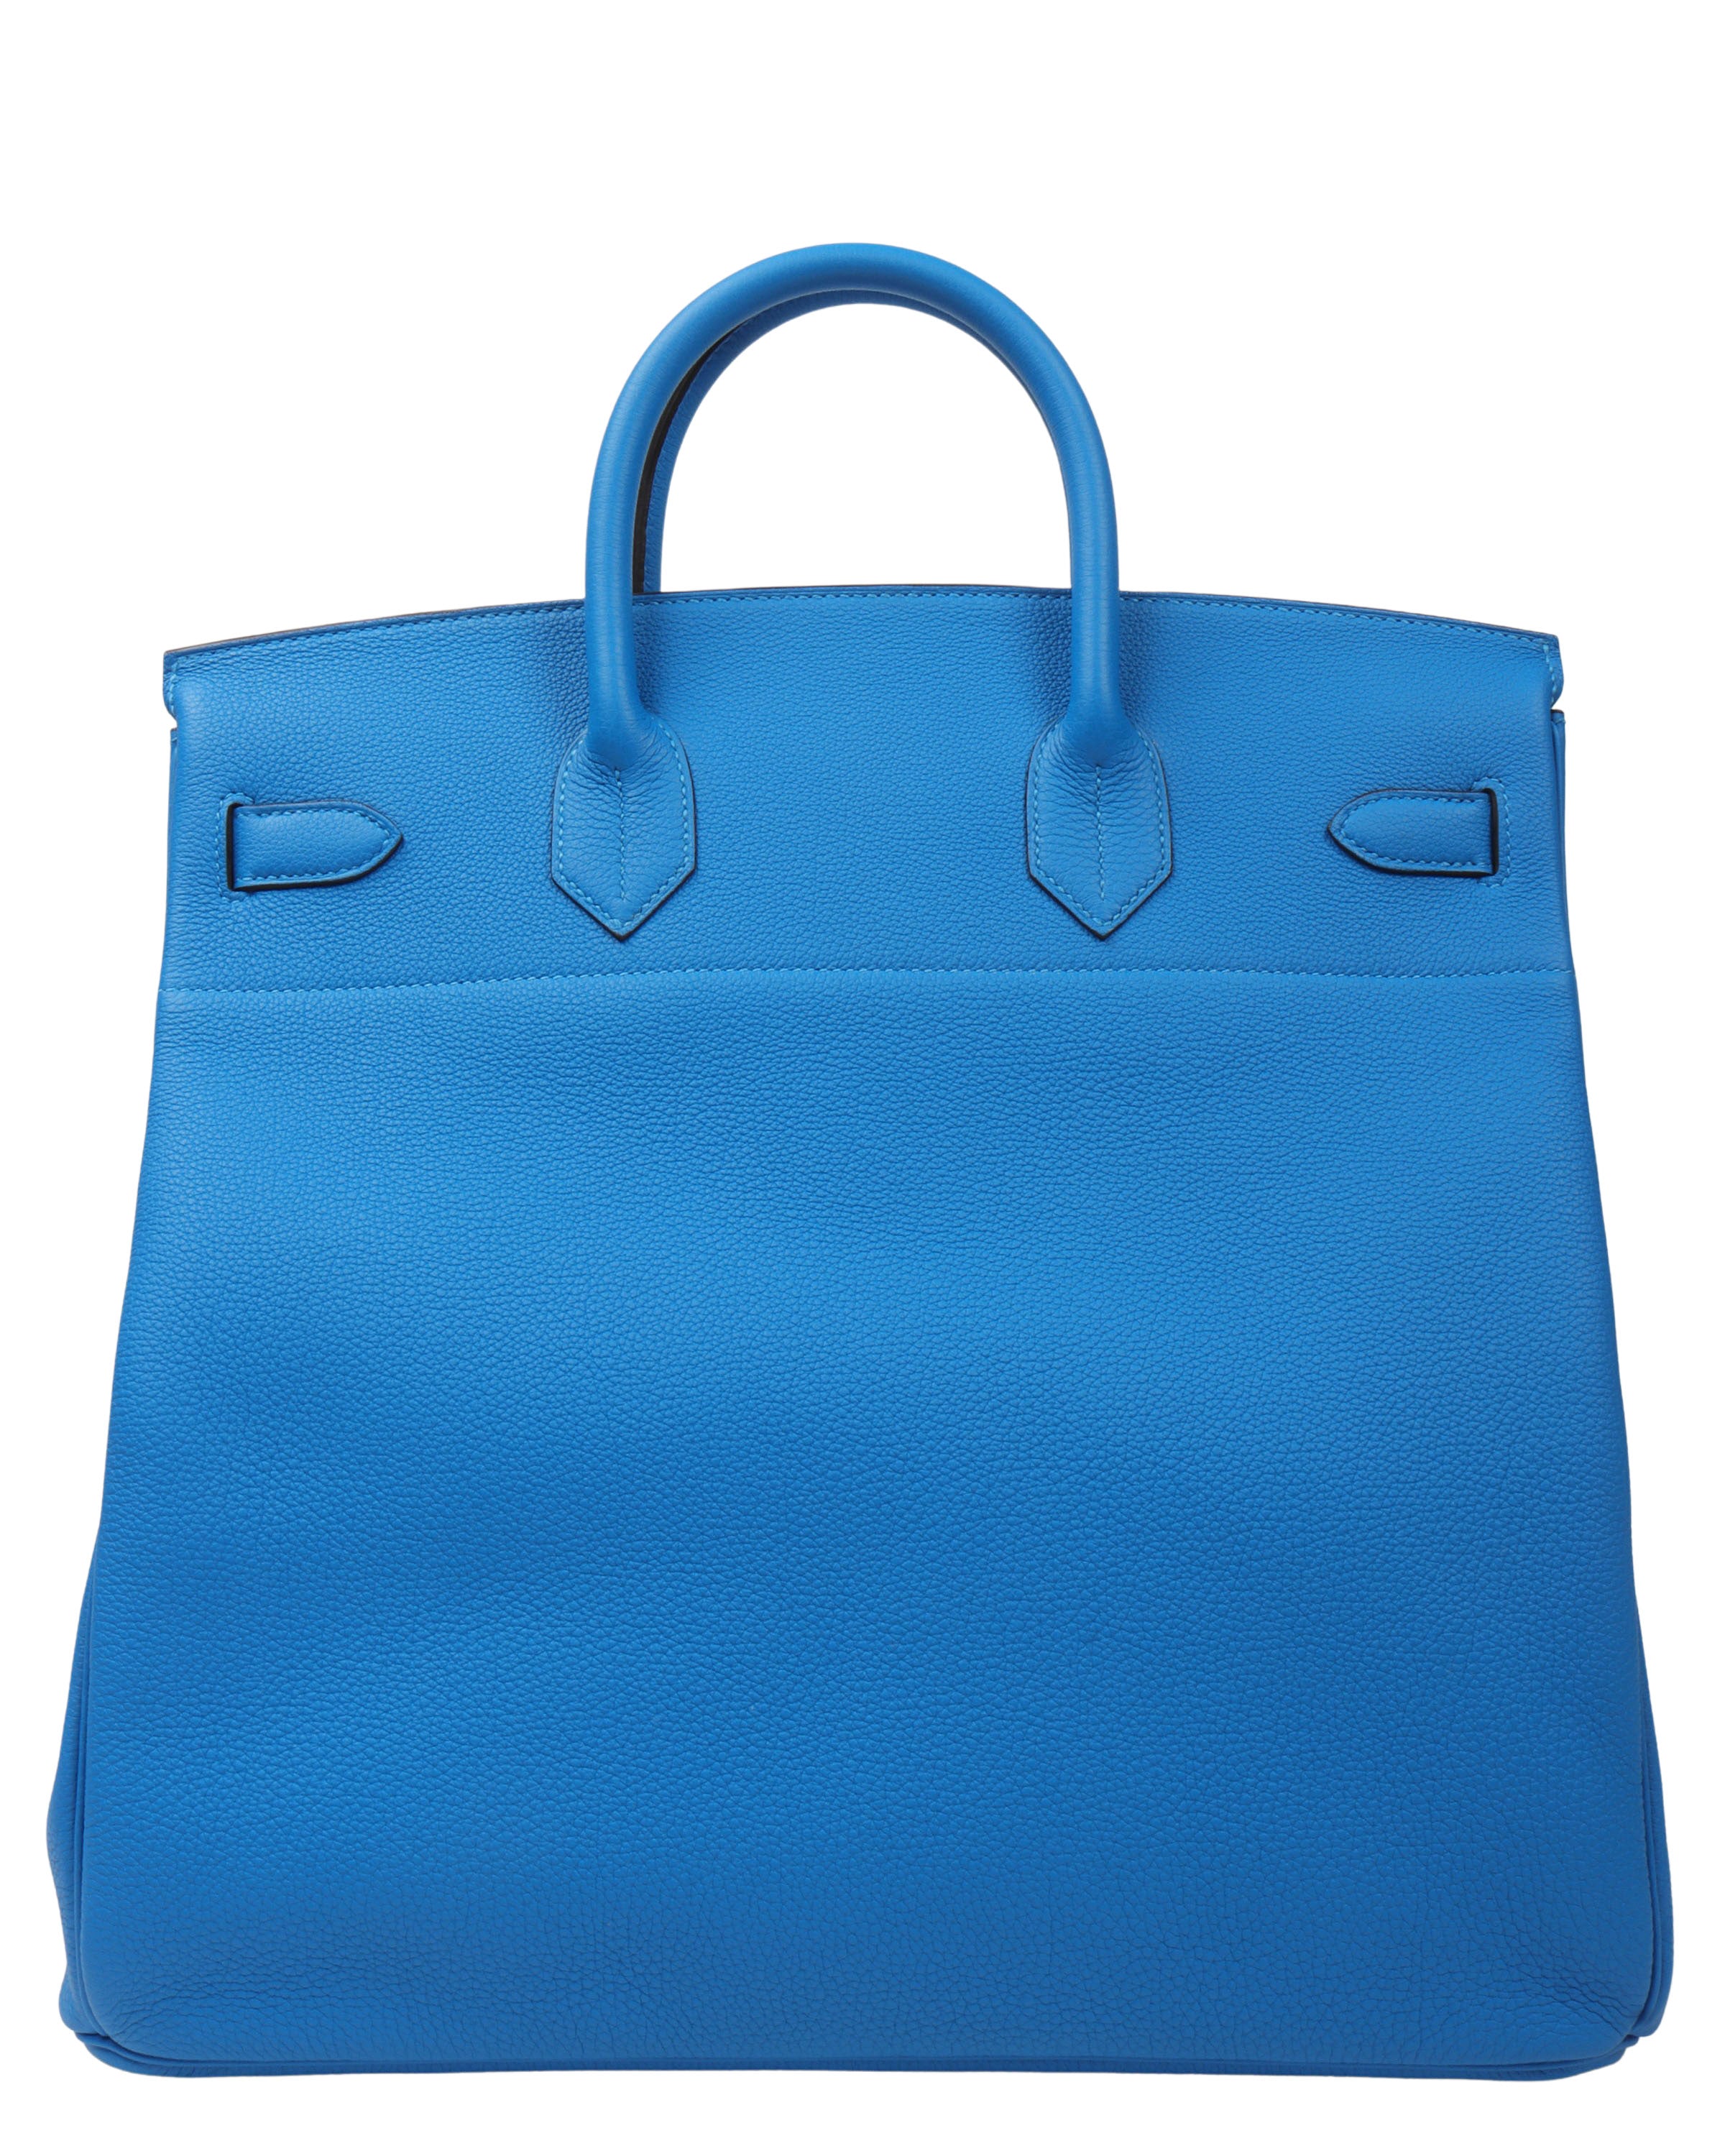 Hermes HAC 40 Togo Calfskin Bag Bleu Hydra